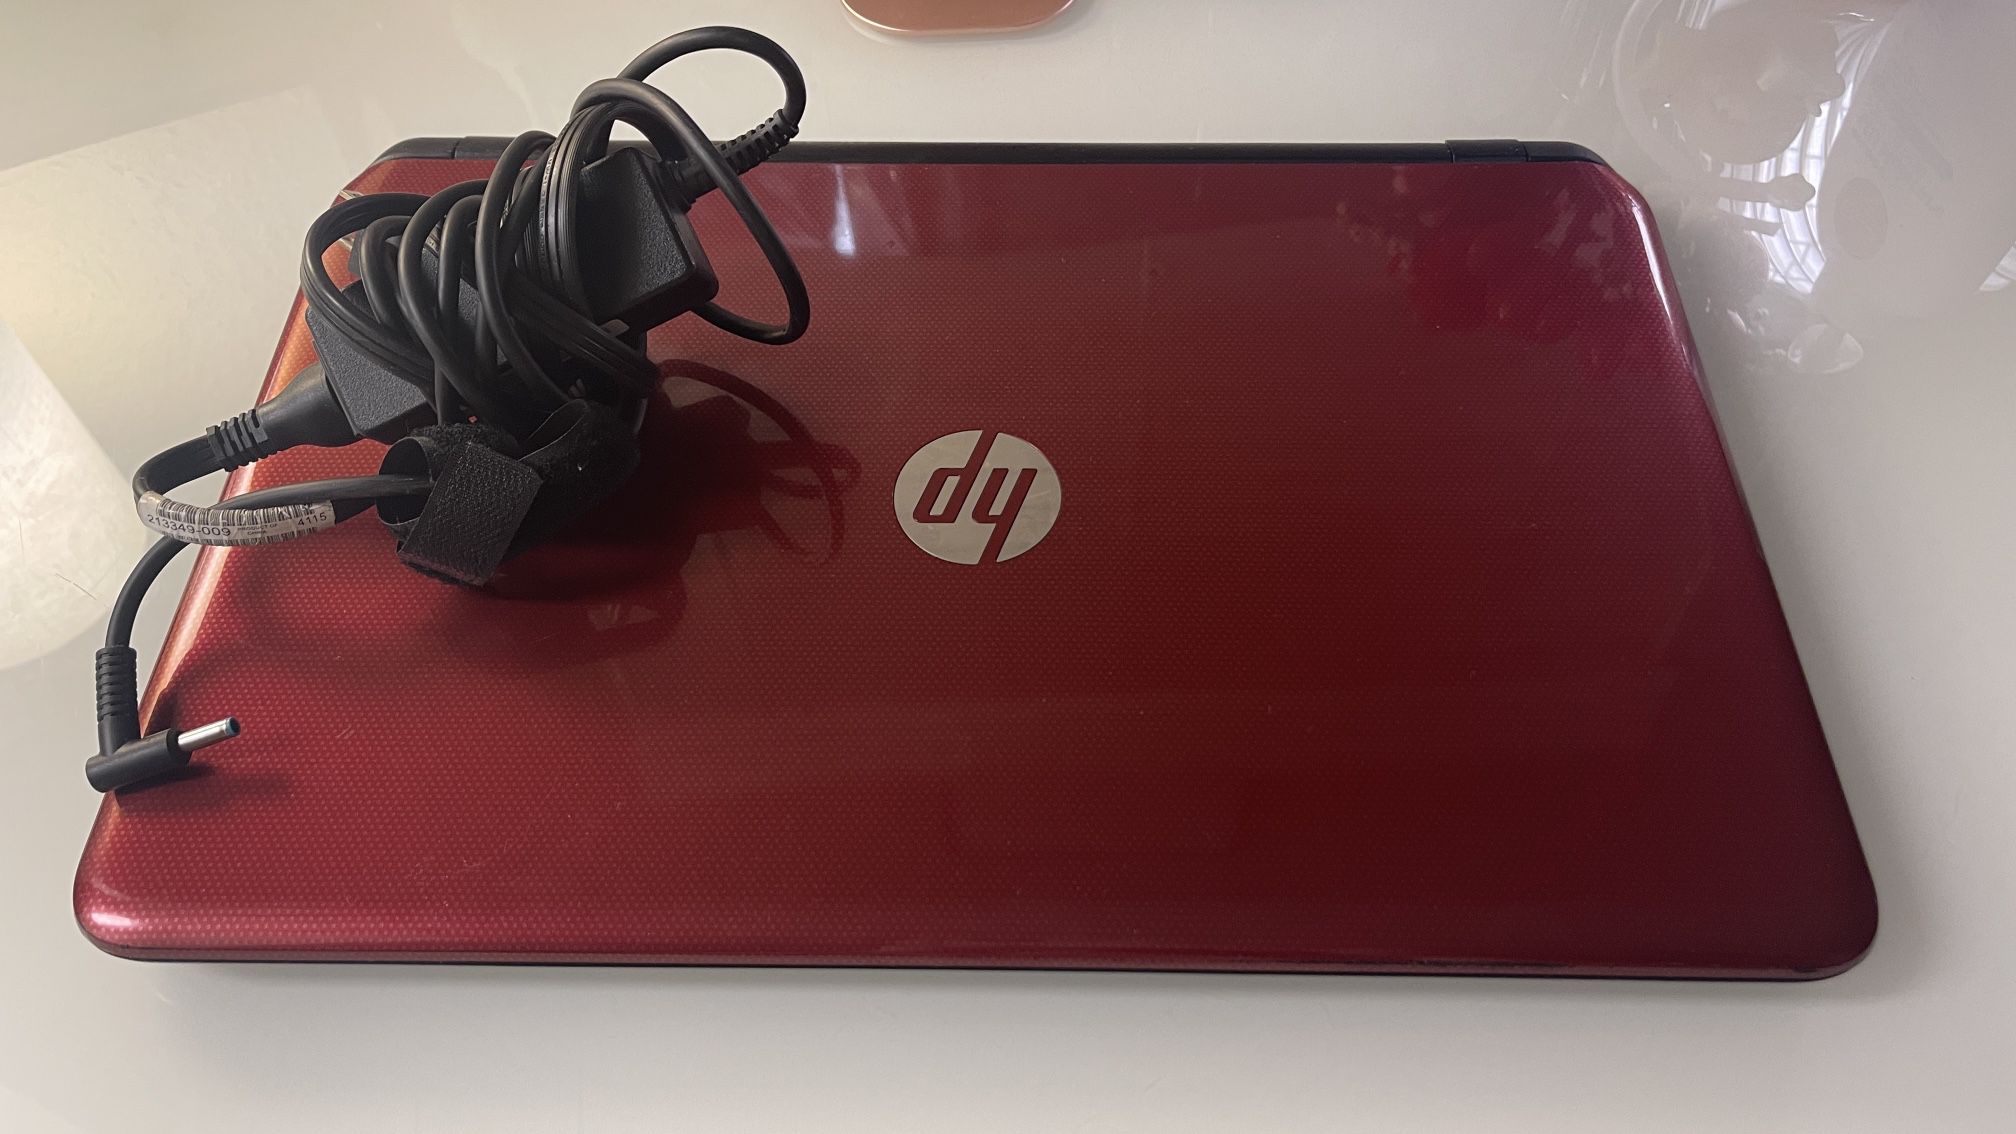 Laptop Computer HP 15-f262wm Windows 10 500GB